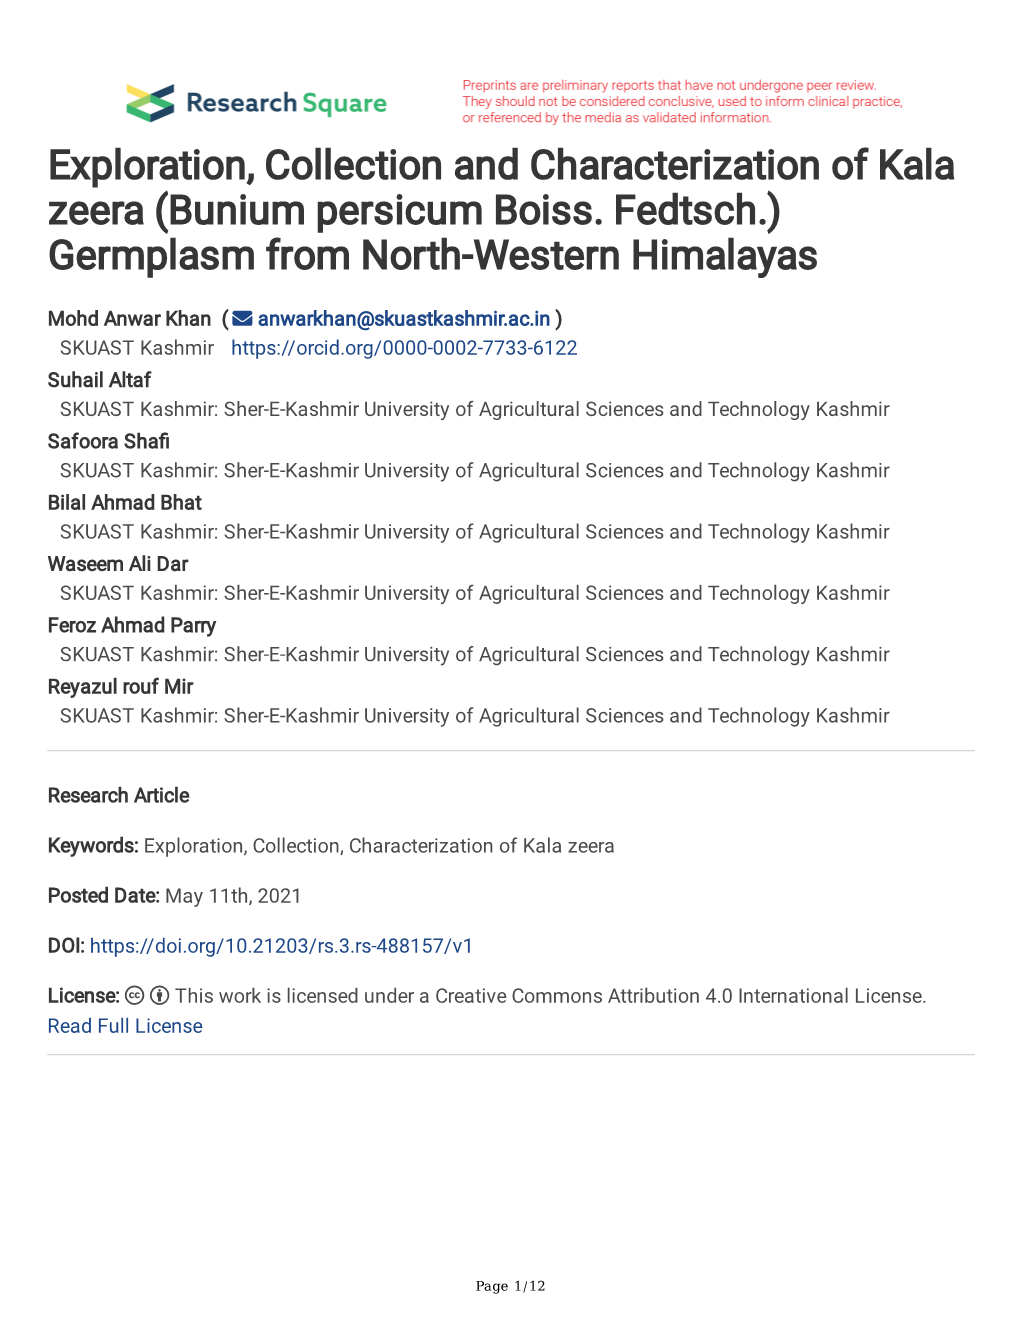 Exploration, Collection and Characterization of Kala Zeera (Bunium Persicum Boiss